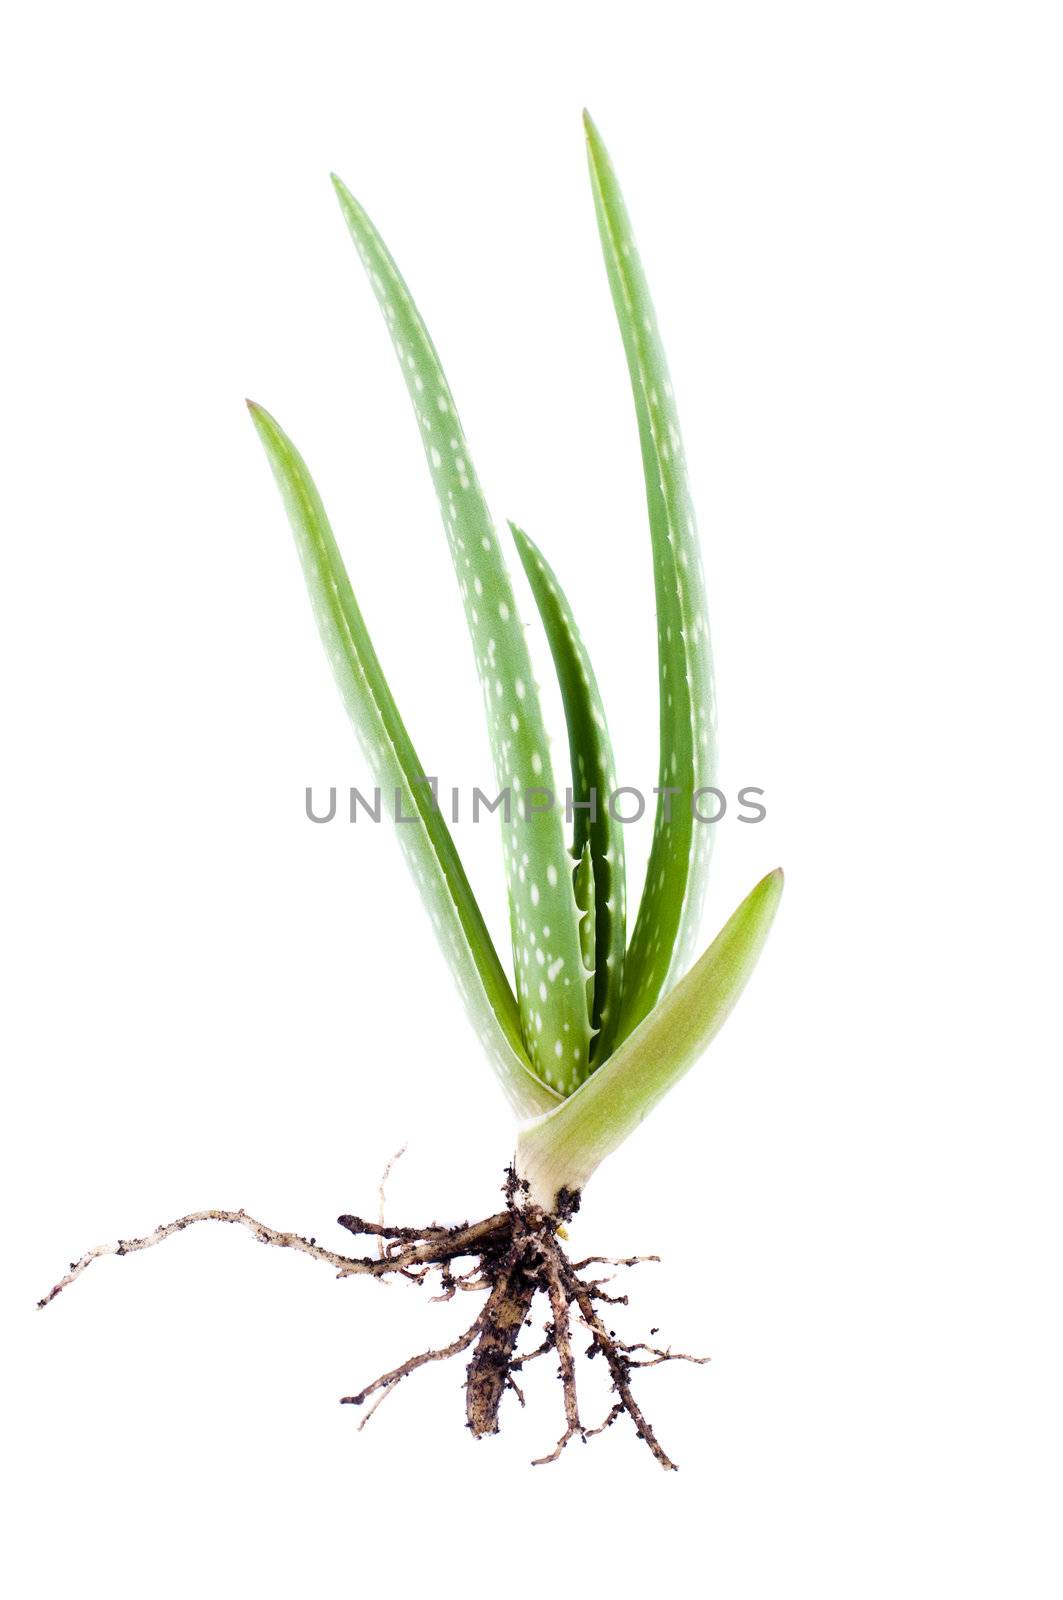 Baby Aloe Vera plant on white background